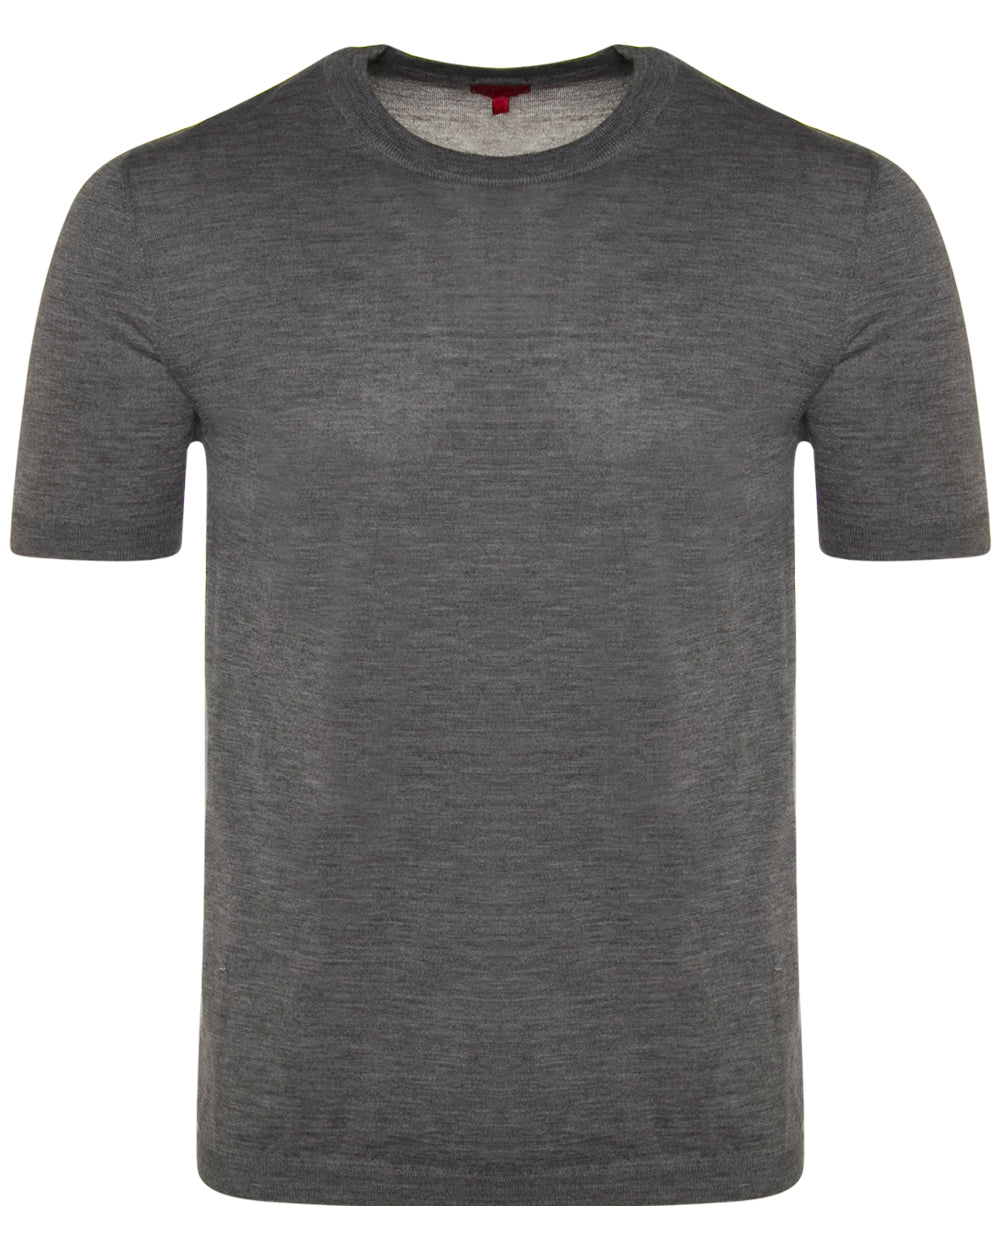 Grey Knit T-Shirt